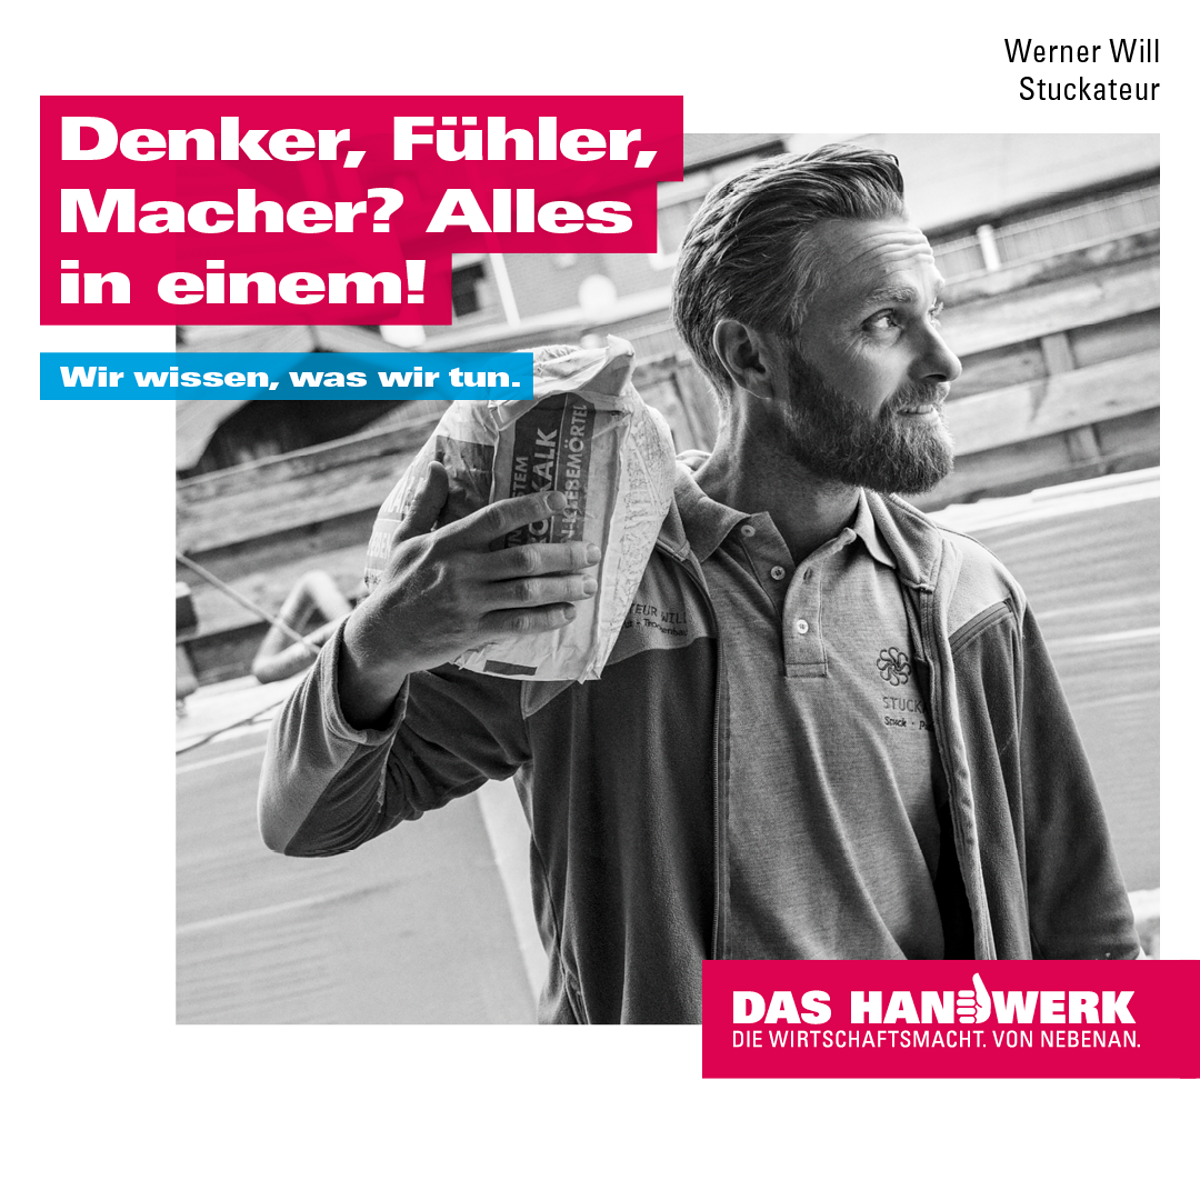 Kampagnenbotschafter Werner Will